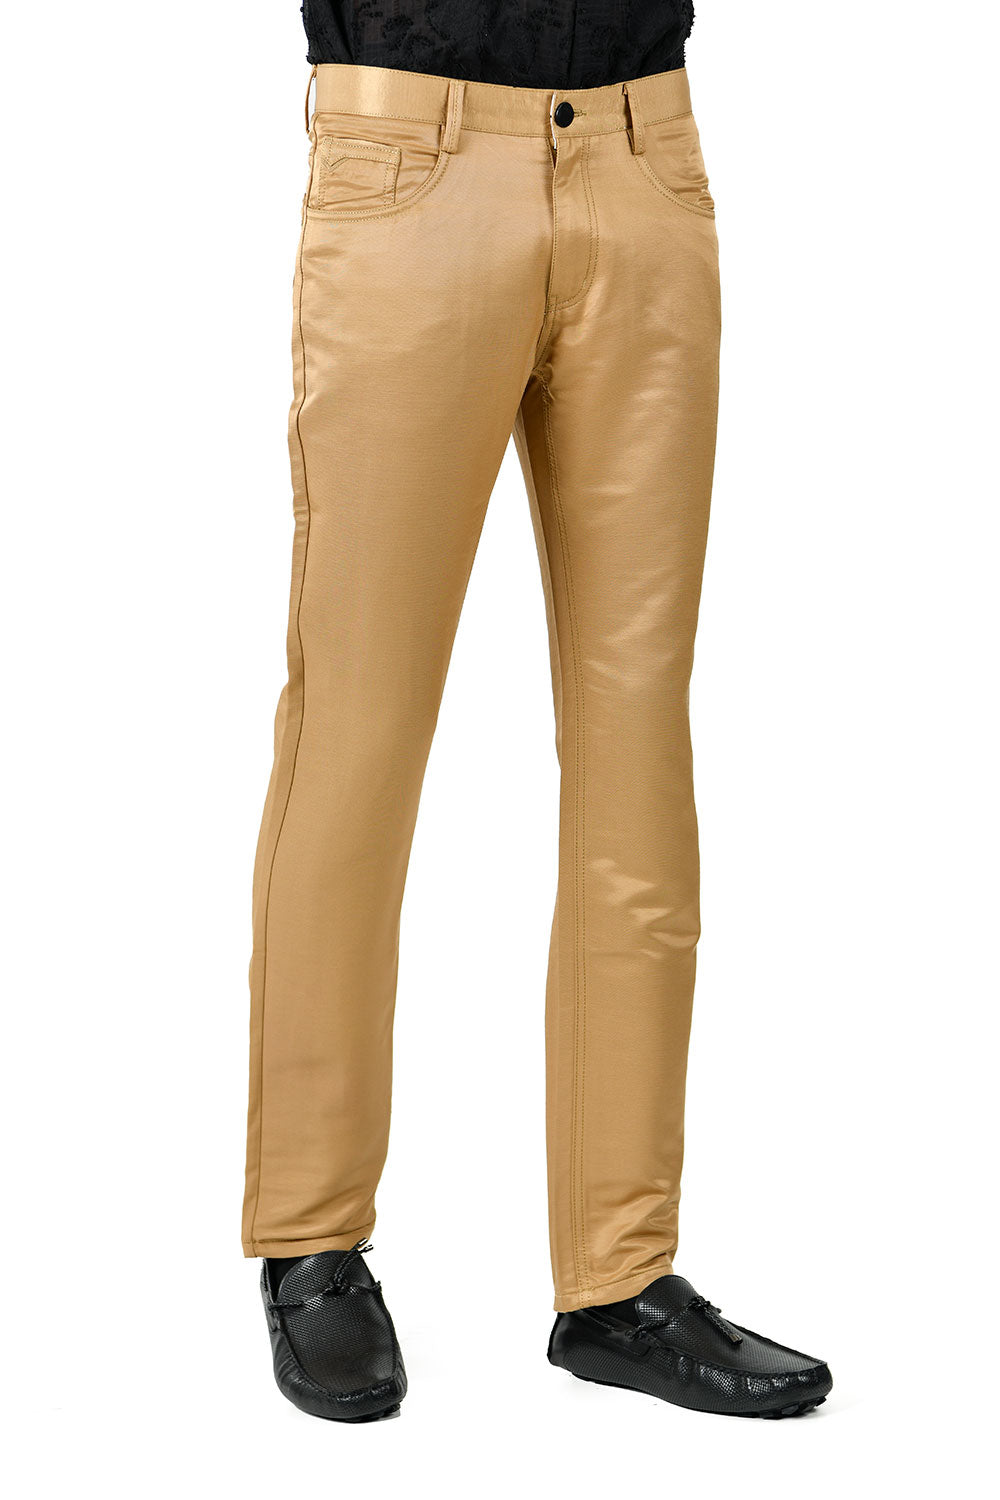 BARABAS Men's Shiny Solid Color Gold Chino Pants 2605